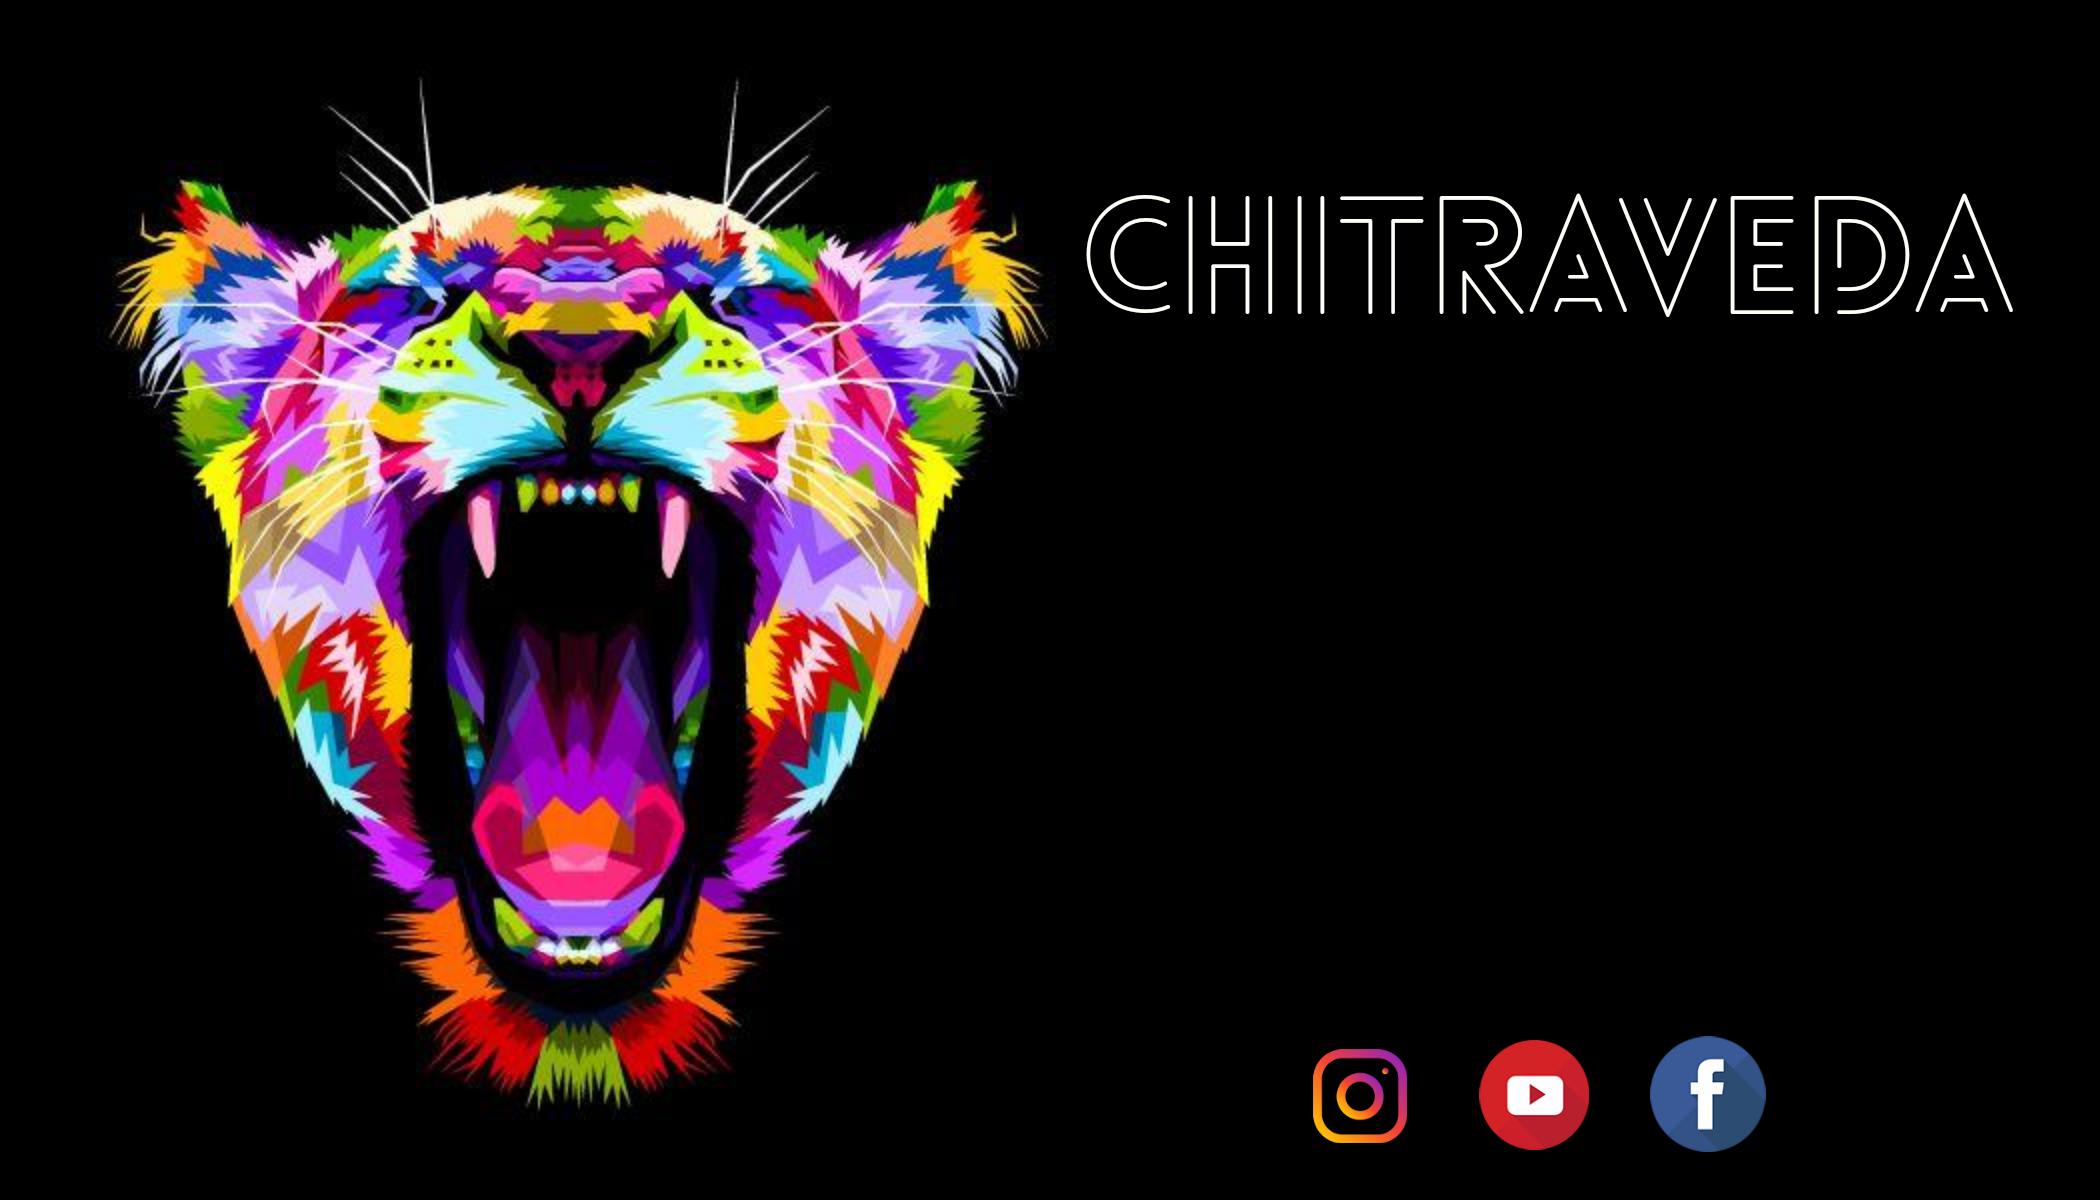 Chitraveda